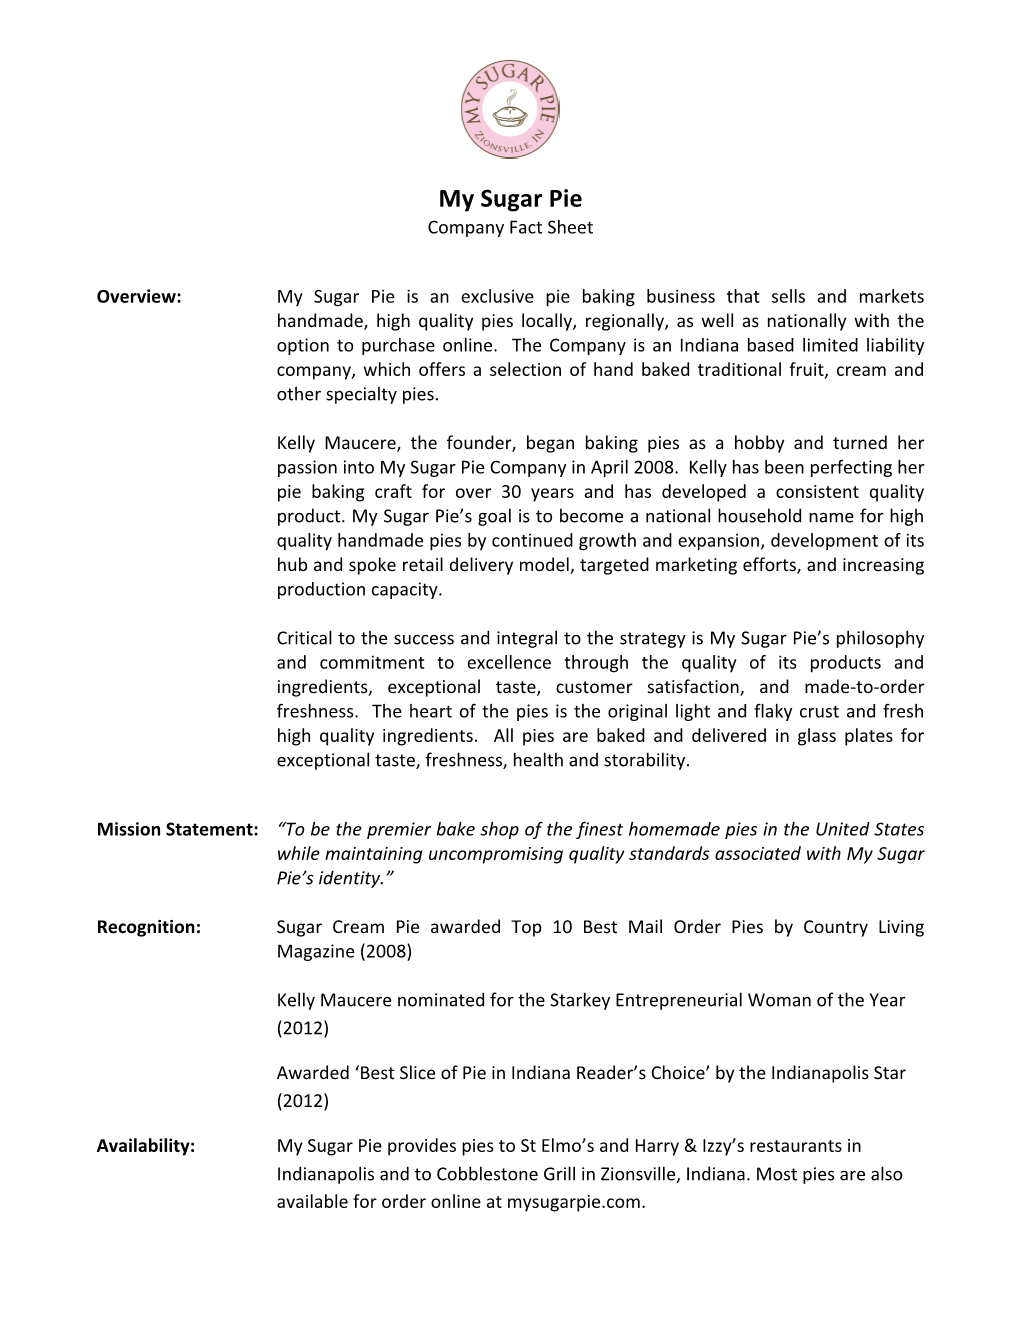 My Sugar Pie Company Fact Sheet